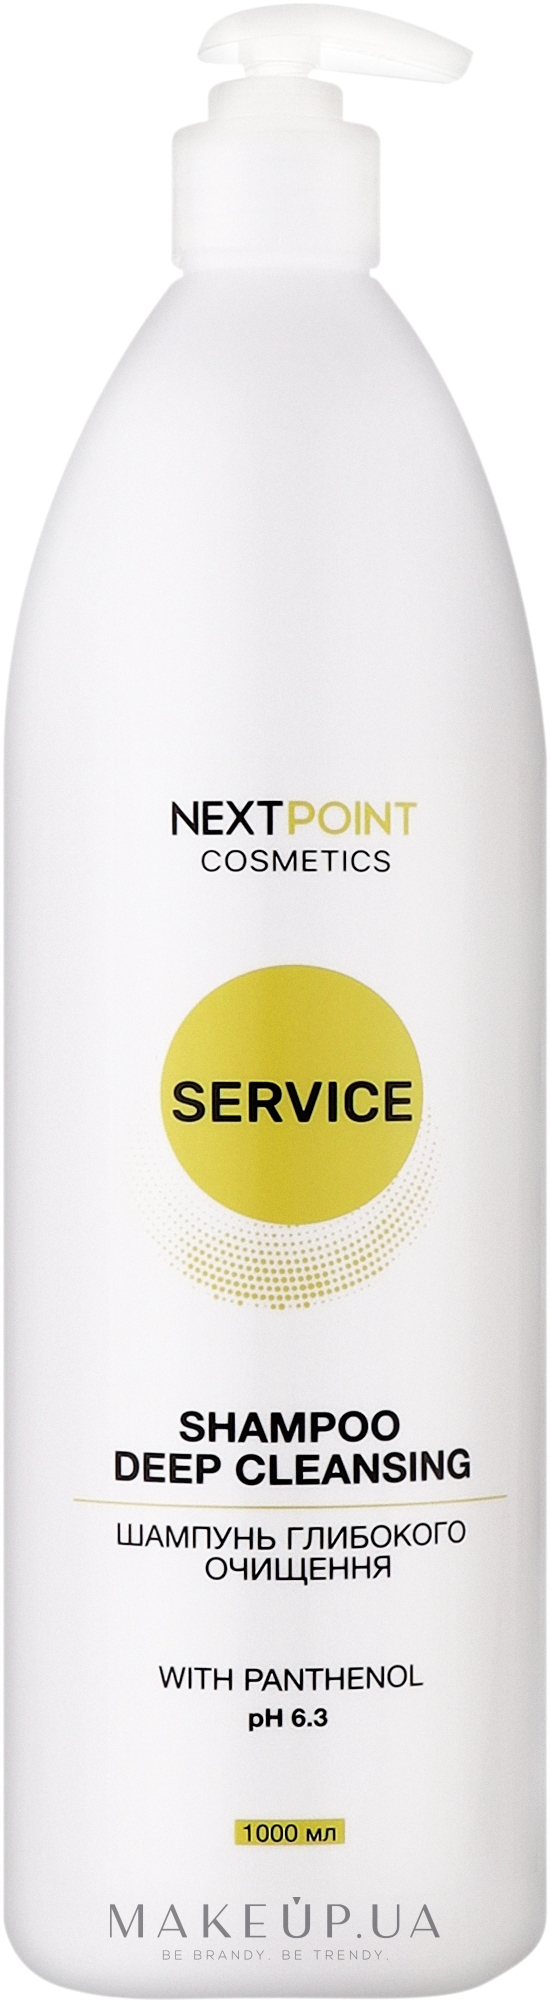 Шампунь глибокого очищення - Nextpoint Cosmetics Service Deep Cleansing Shampoo — фото 1000ml